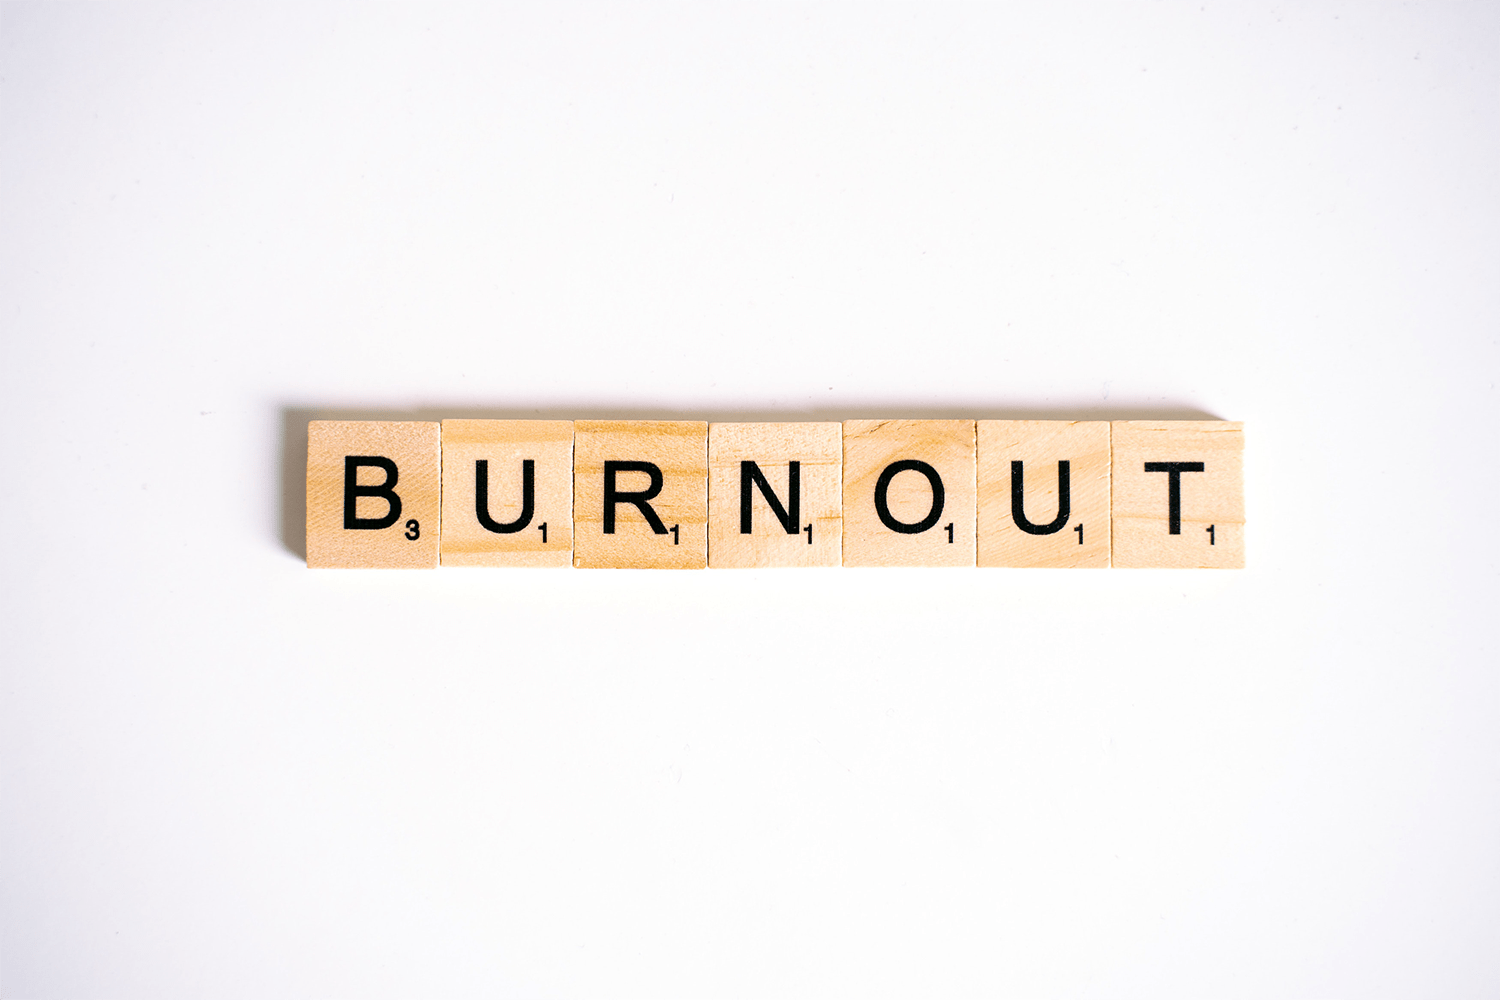 burnout written out